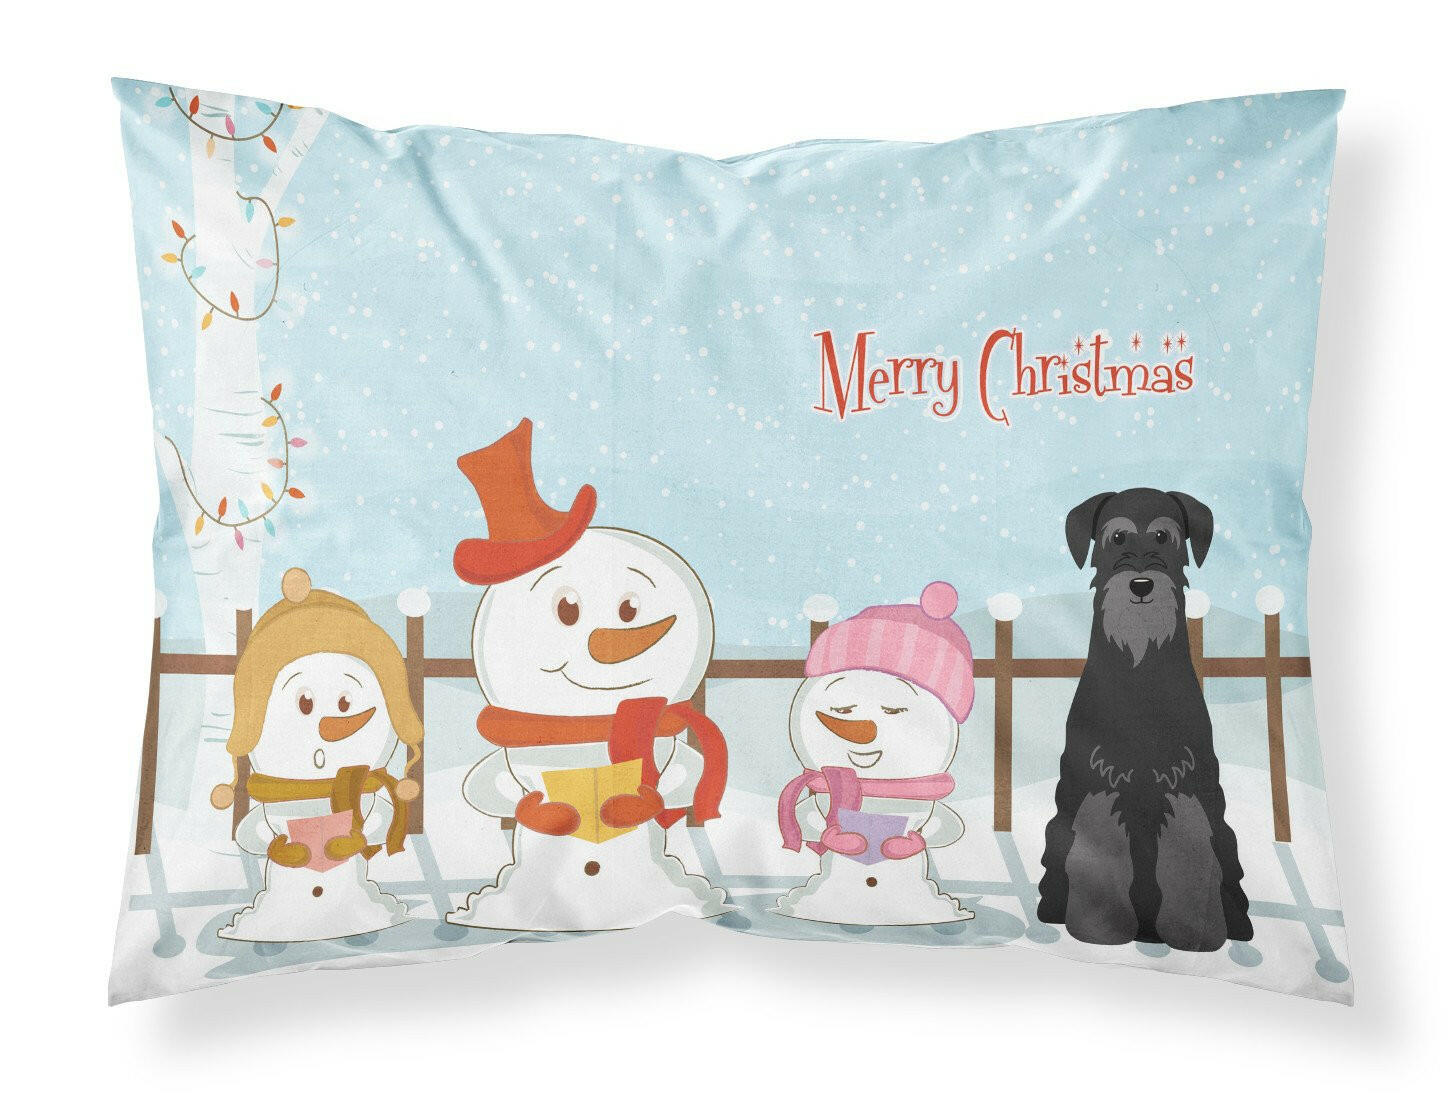 Merry Christmas Carolers Standard Schnauzer Black Fabric Standard Pillowcase BB2363PILLOWCASE by Caroline's Treasures